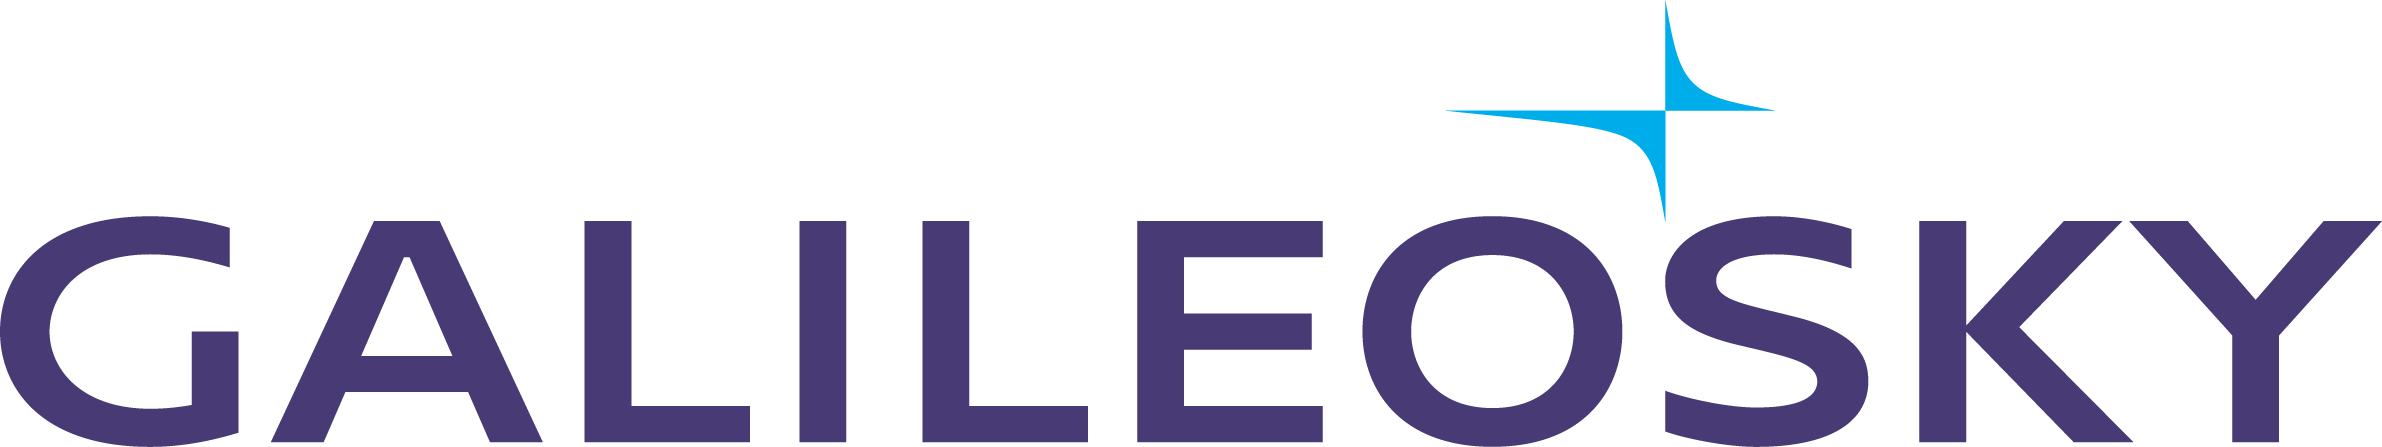 galileosky logo